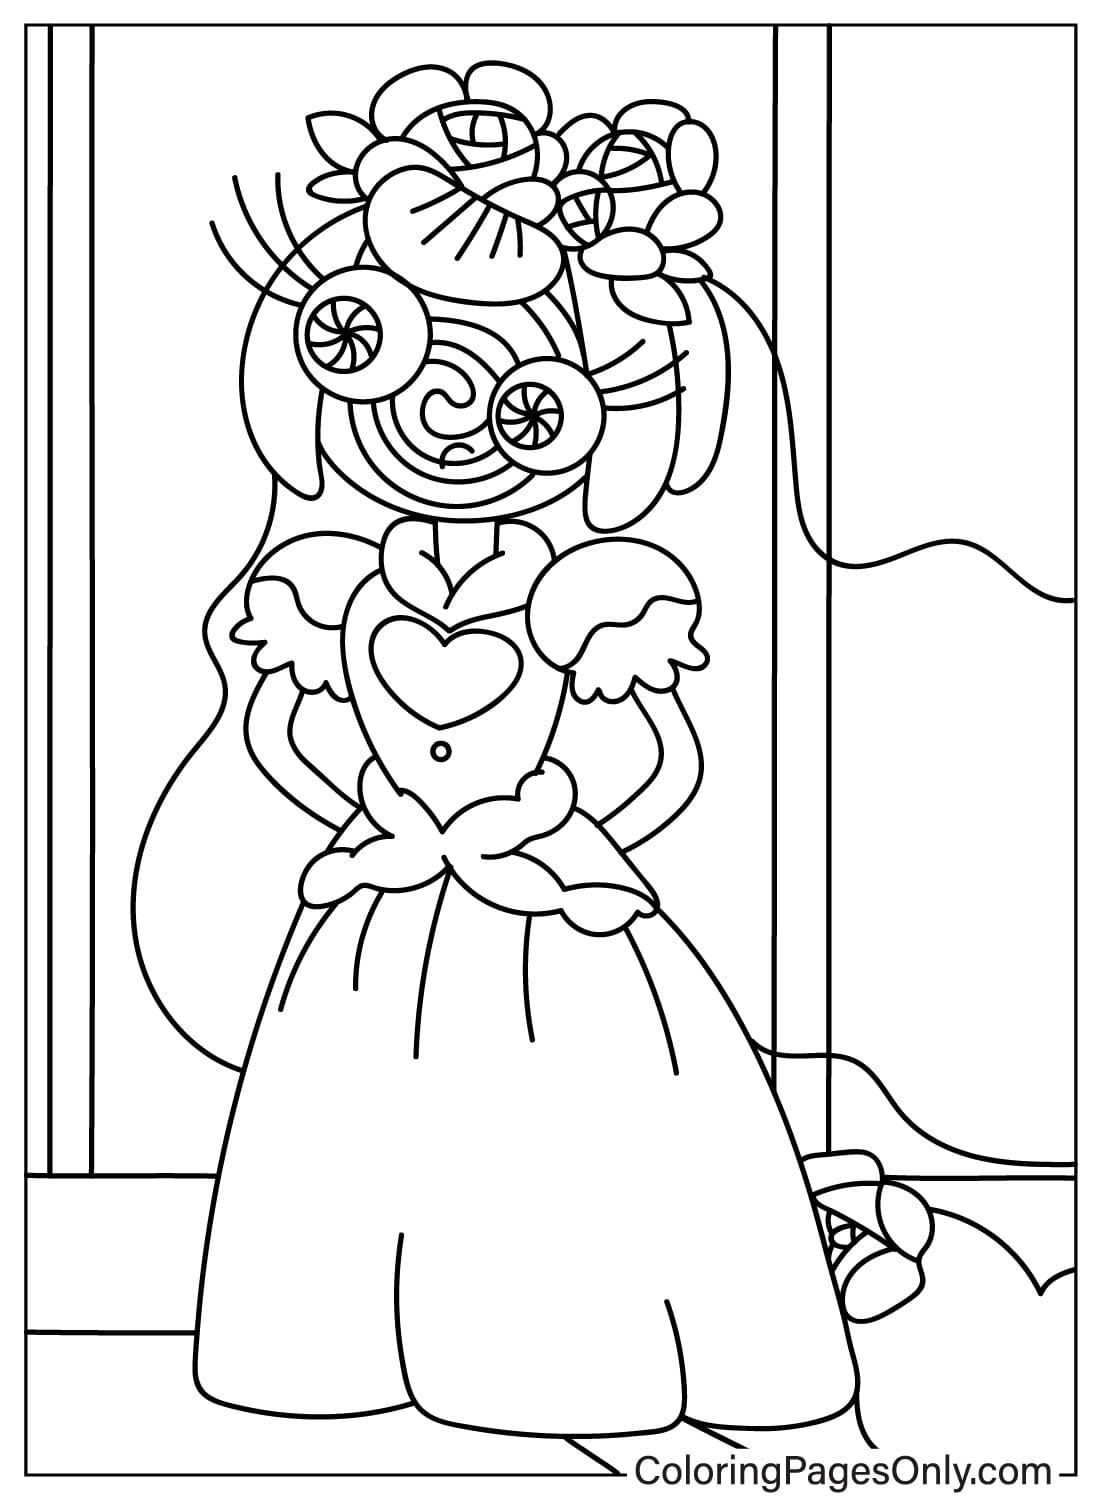 Princess Loolilalu Coloring Page for Adults from Princess Loolilalu